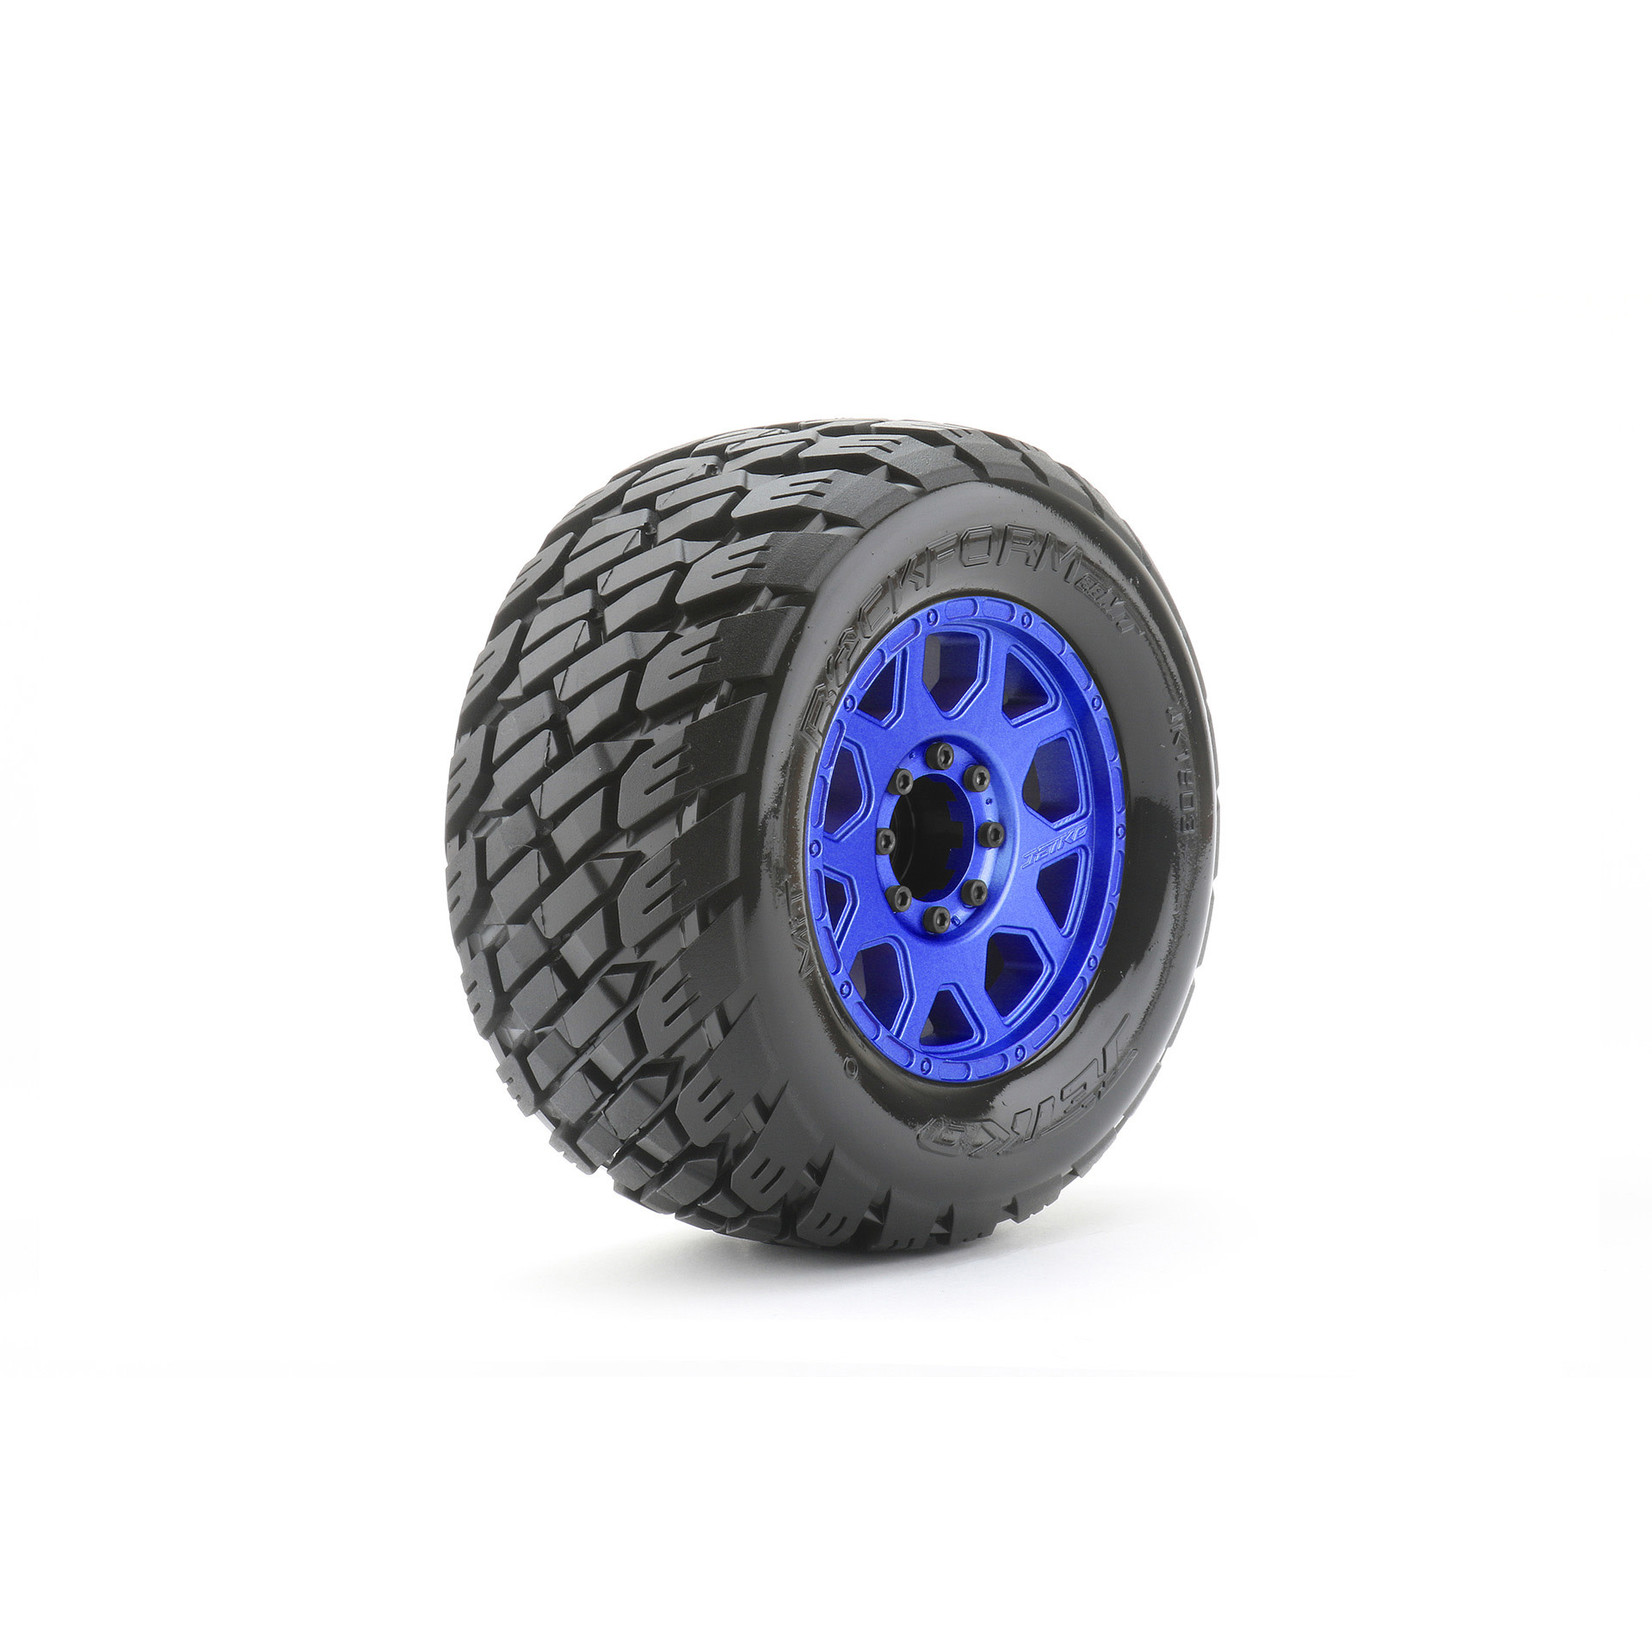 Jetko Tires Jetko Tires 1/8 MT 3.8 EX-Rockform, Mounted on Metal Blue Claw Rim, Medium Soft, Belted, Glued, 17mm 1/2" Offset #JKO1803CLMSGBB2